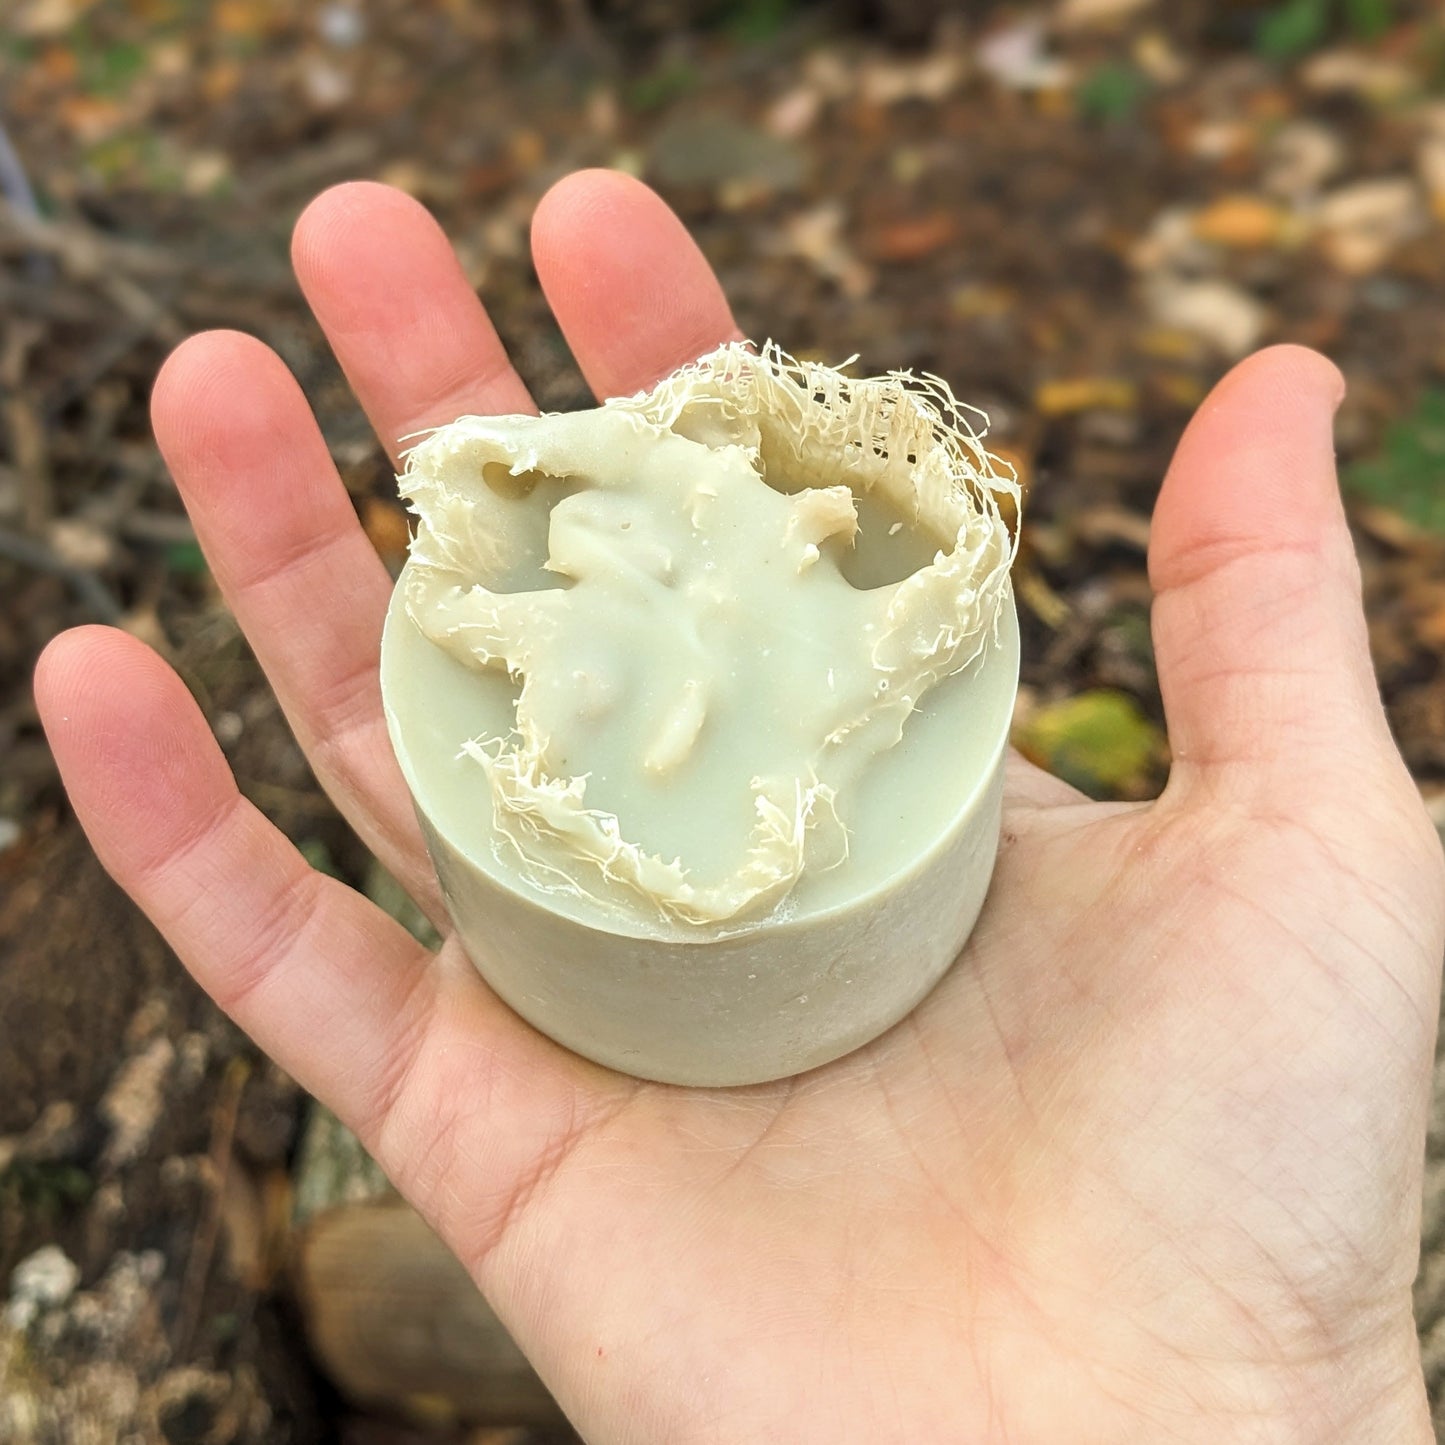 Natural Soap | LUFFA SOAP - Homegrown Exfoliating Loofa Sponge Soap